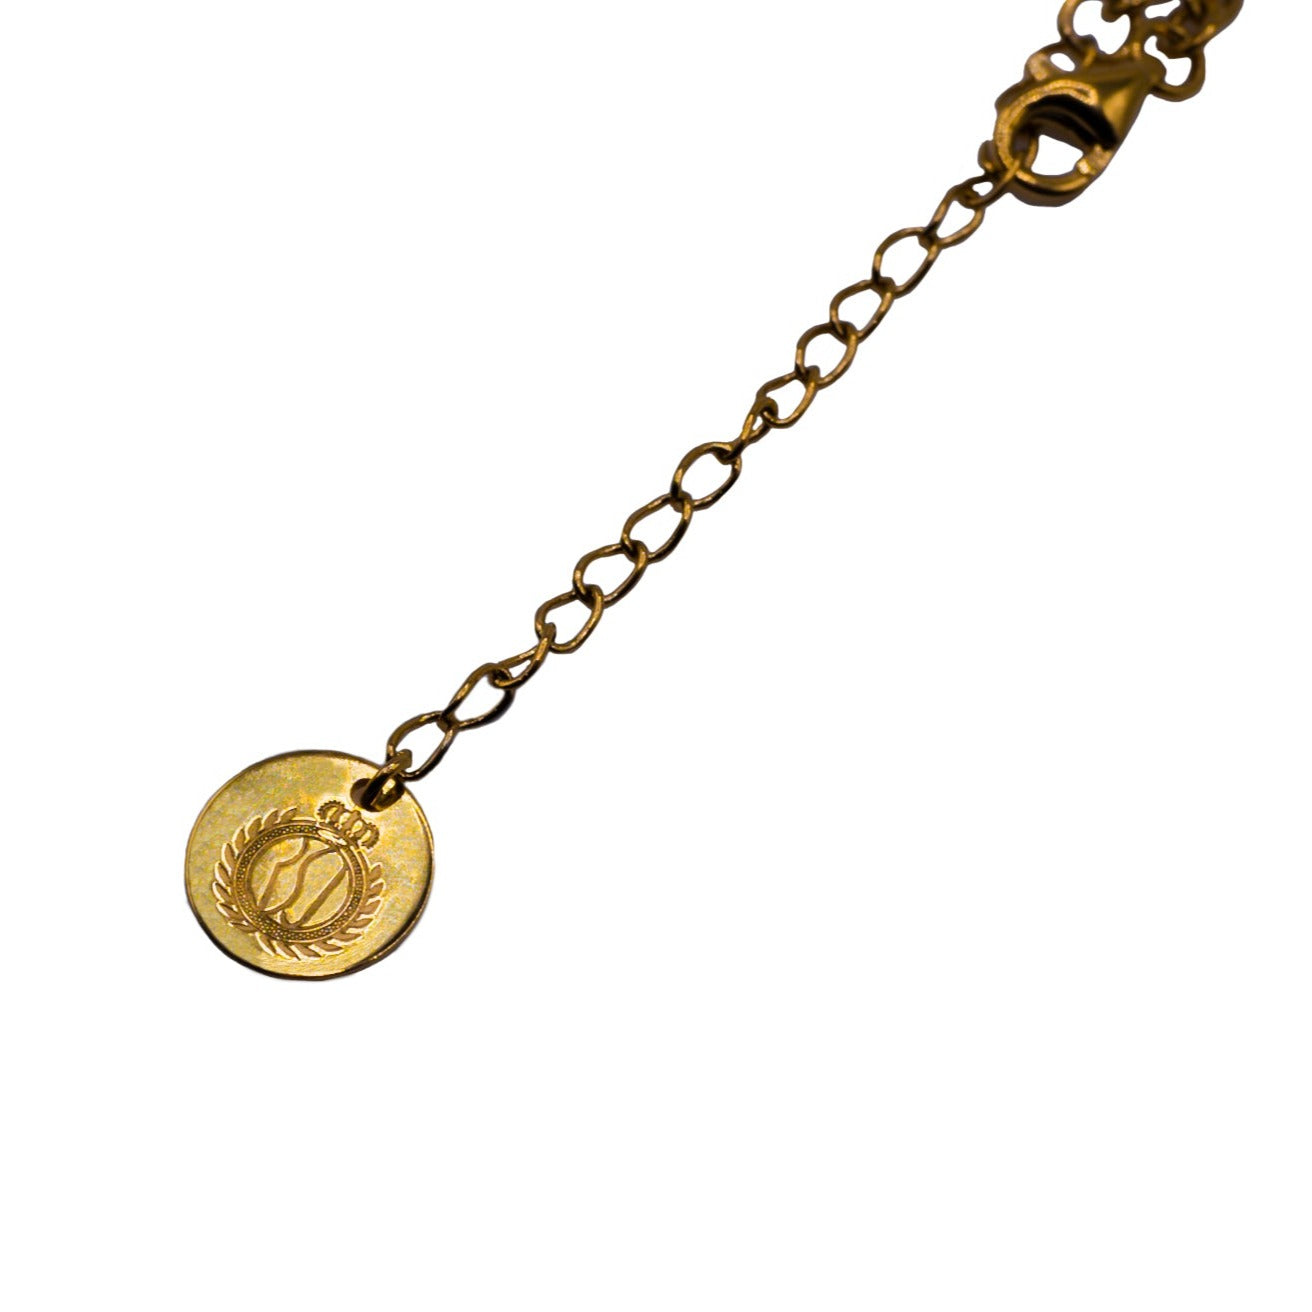 Smokey Quartz pendant in 18k gold vermeil-RSJ Collection LLC